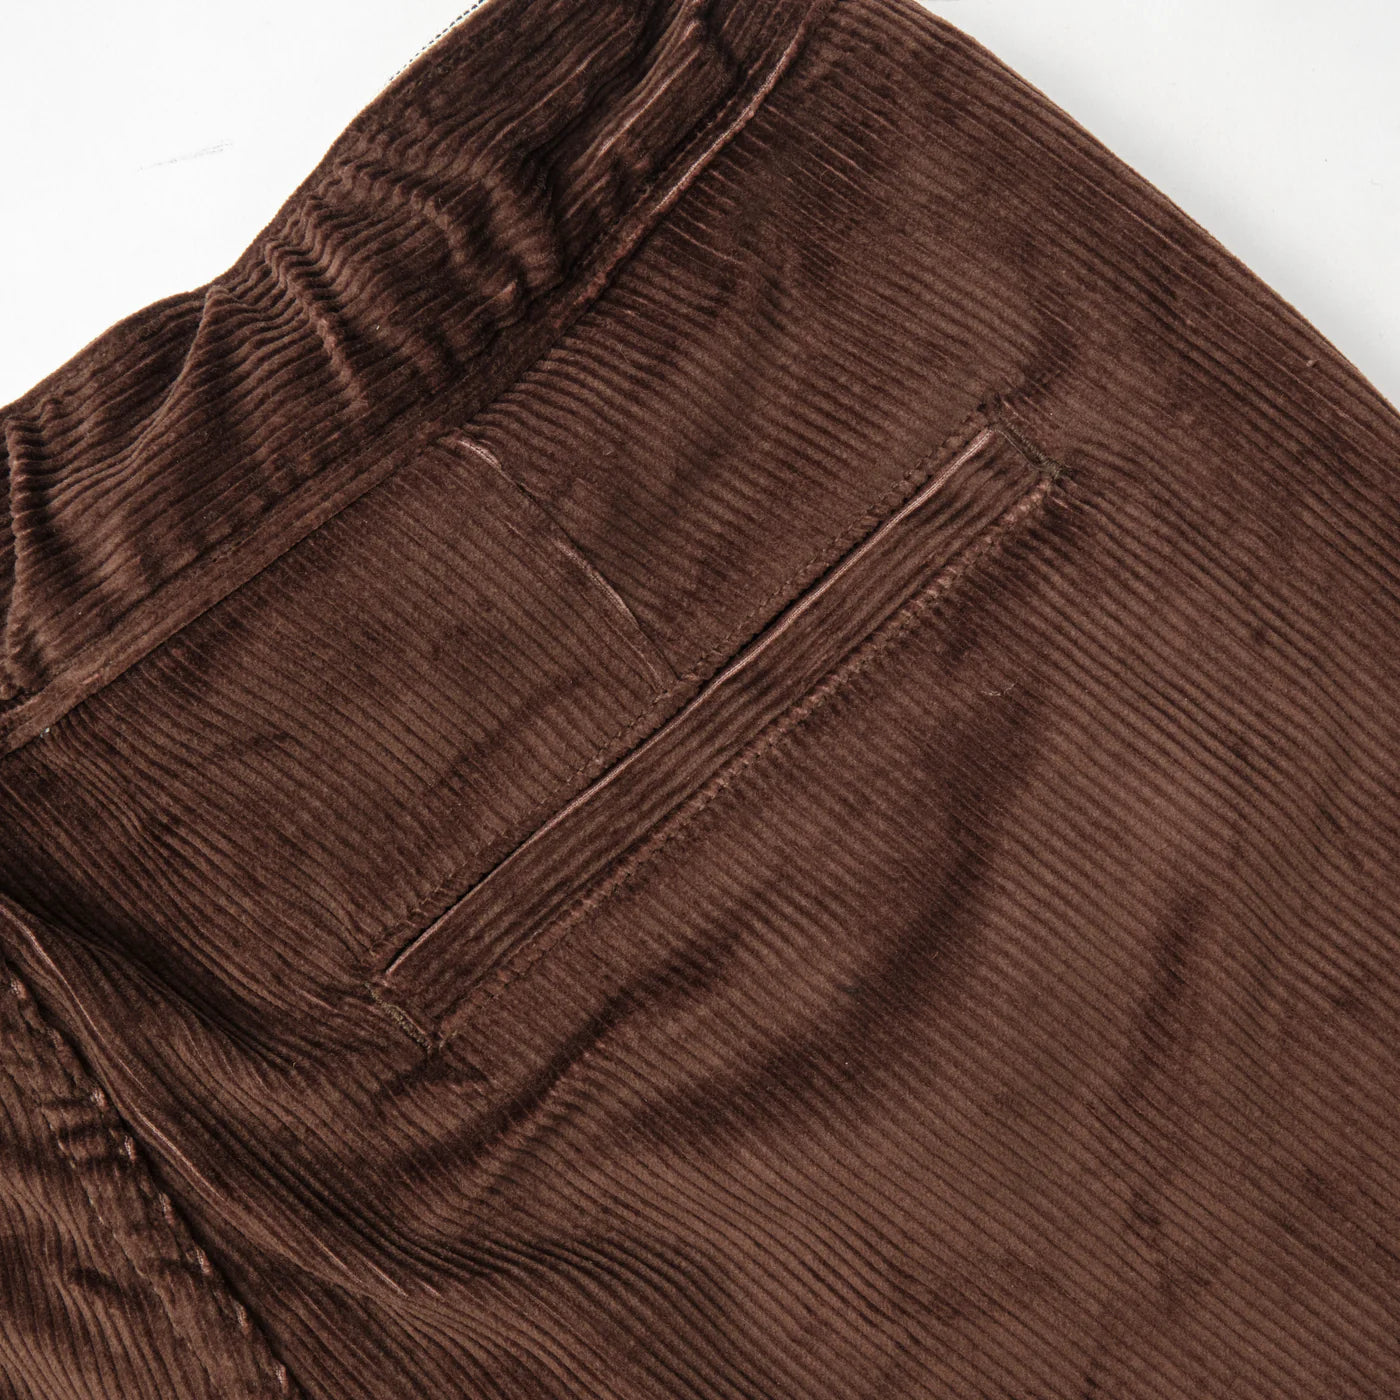 Freenote Cloth - Deck Short Brown Cord - City Workshop Men's Supply Co.